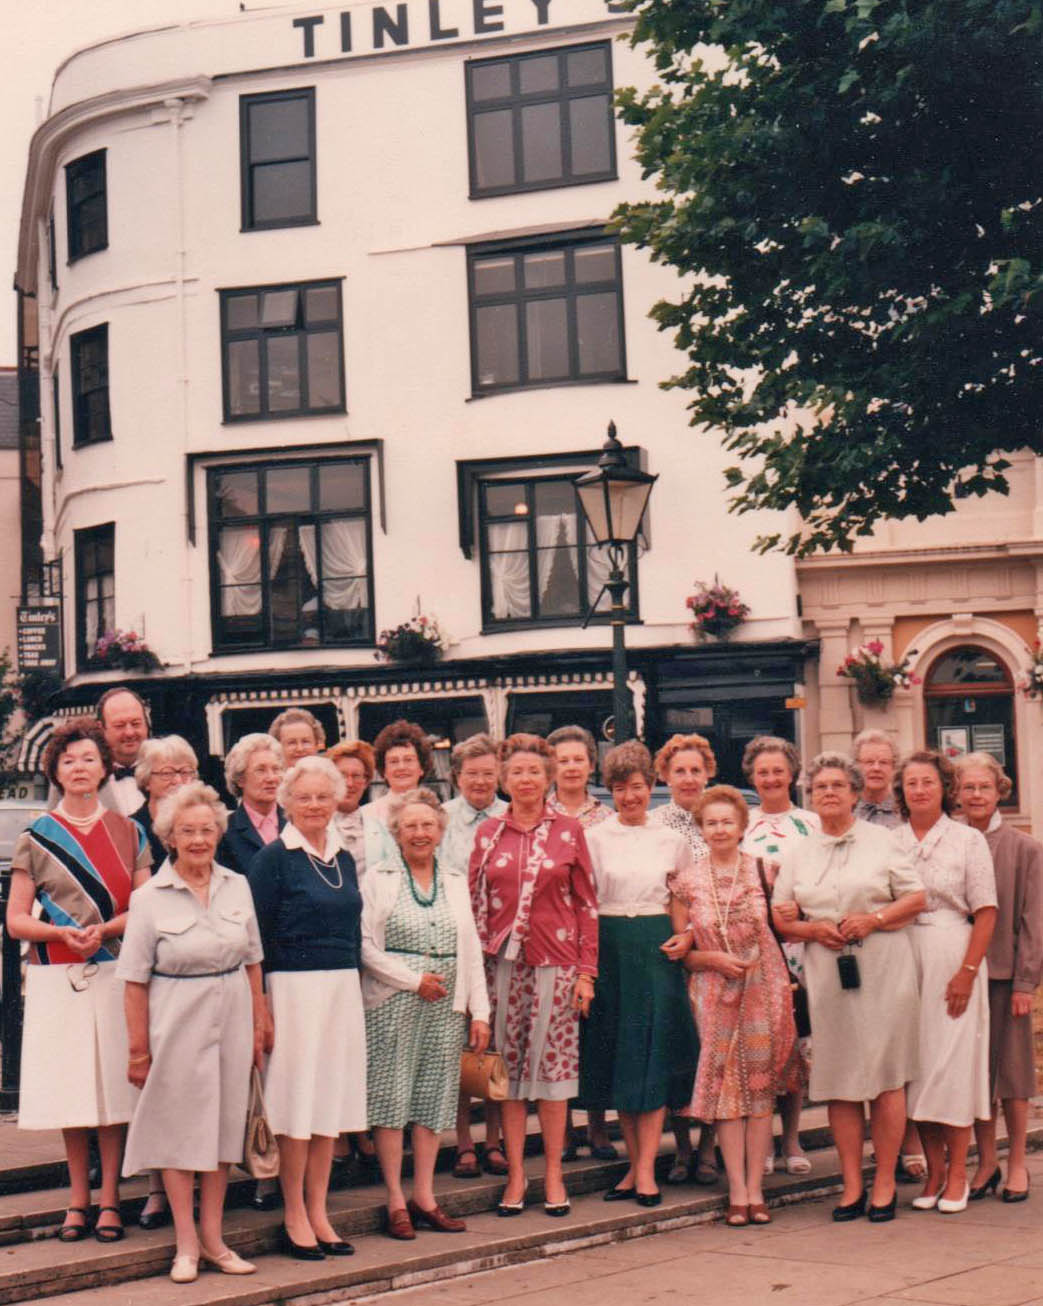 1987 - Exeter Team, Tinleys